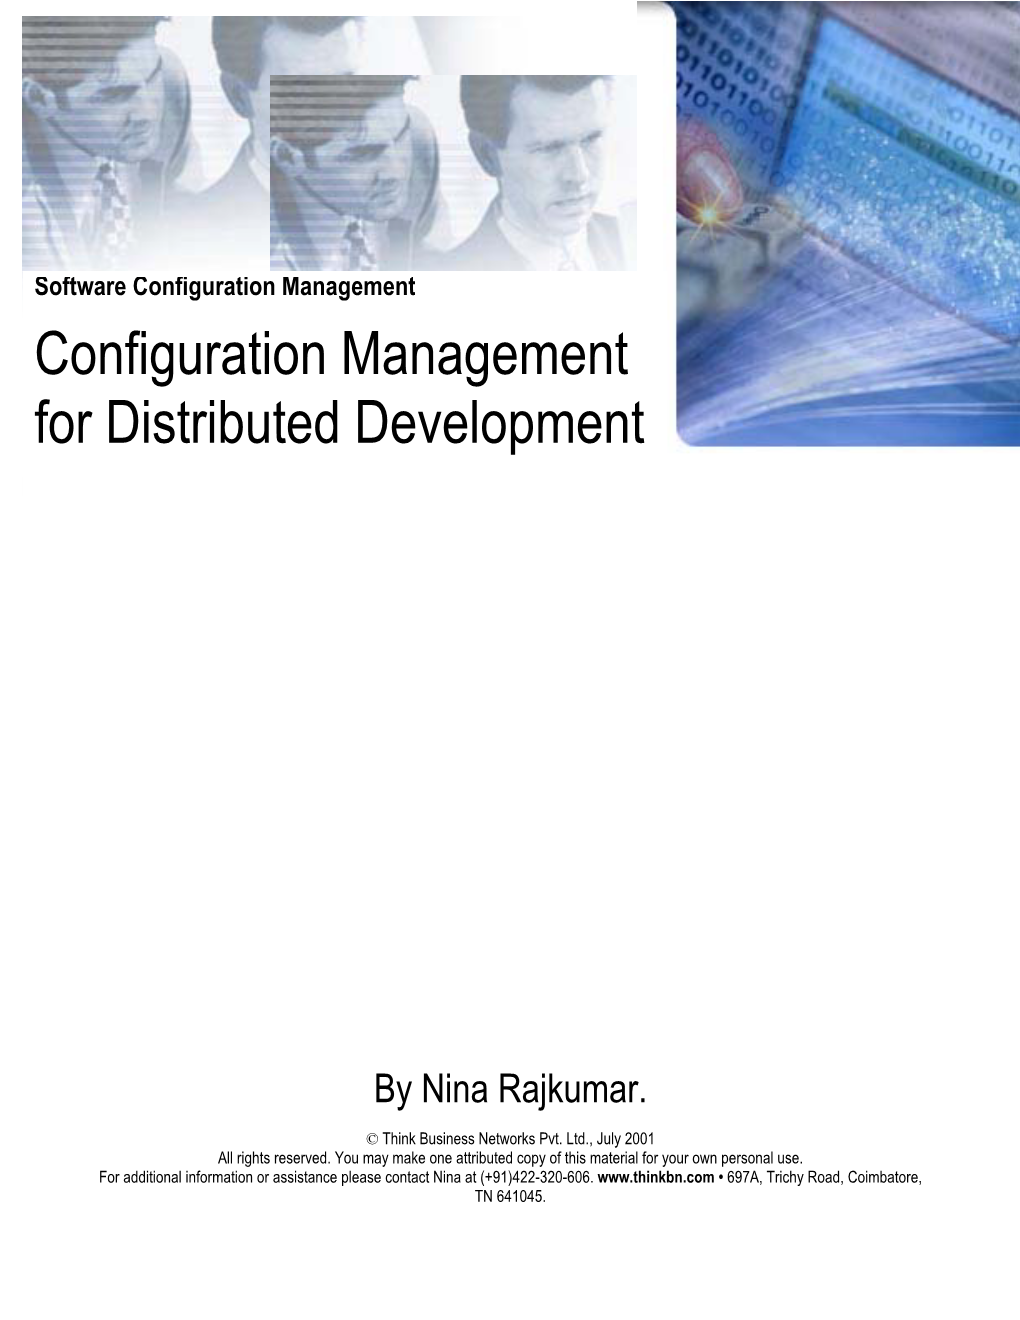 Configuration Management for Distributed Development